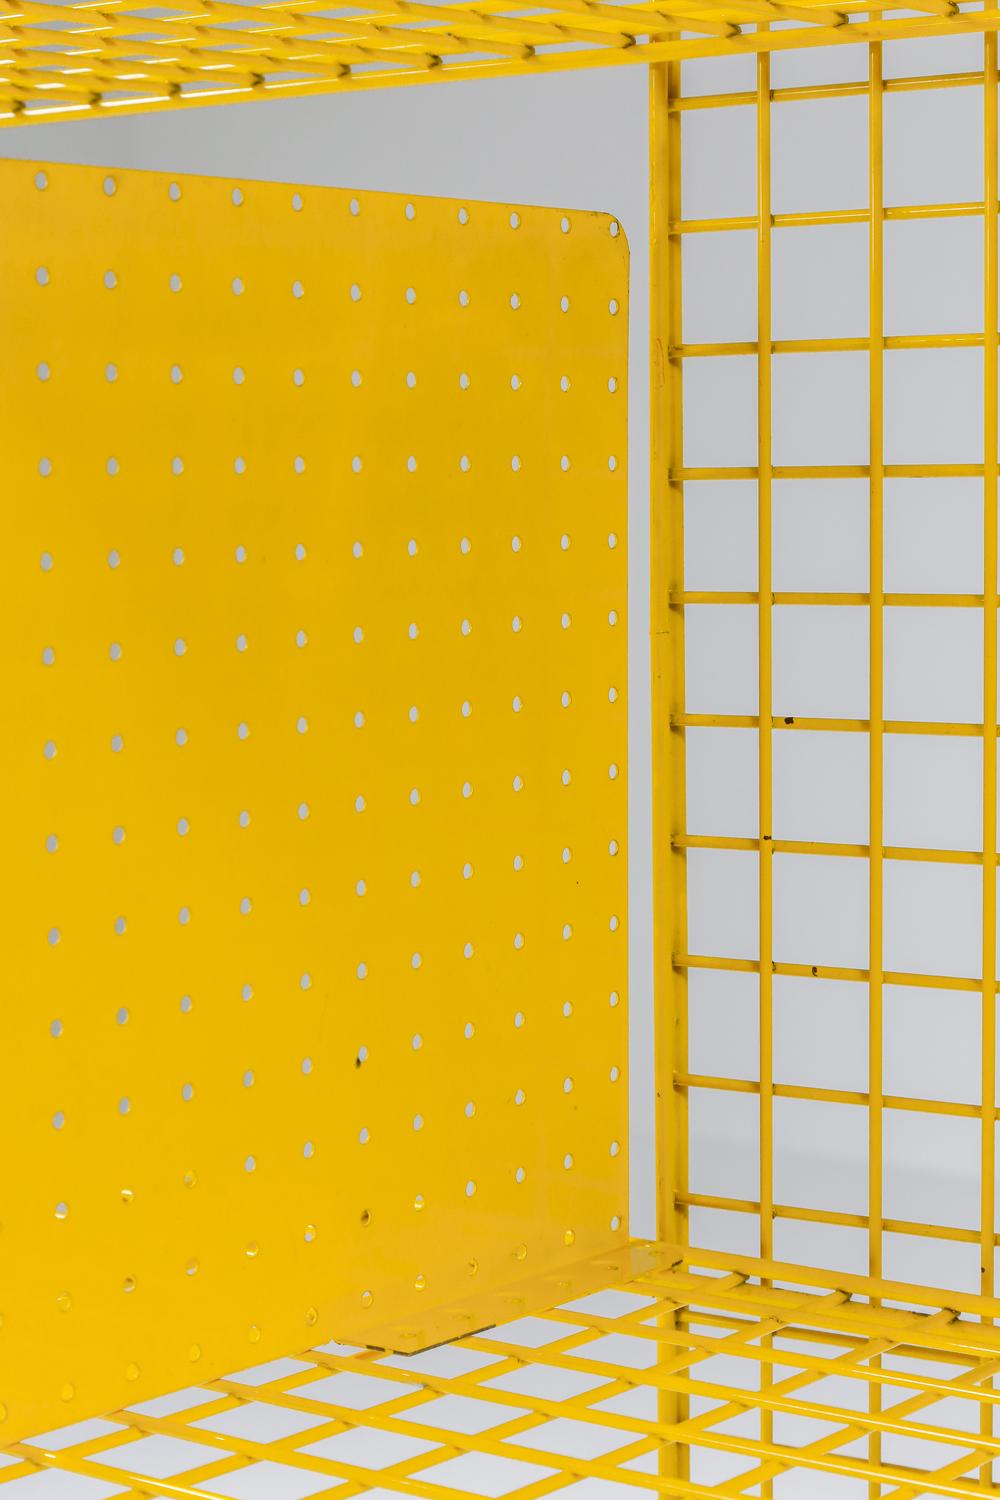 Steel Bieffeplast Yellow Metal Shelve System, Post-Modern Italian Design, 1970